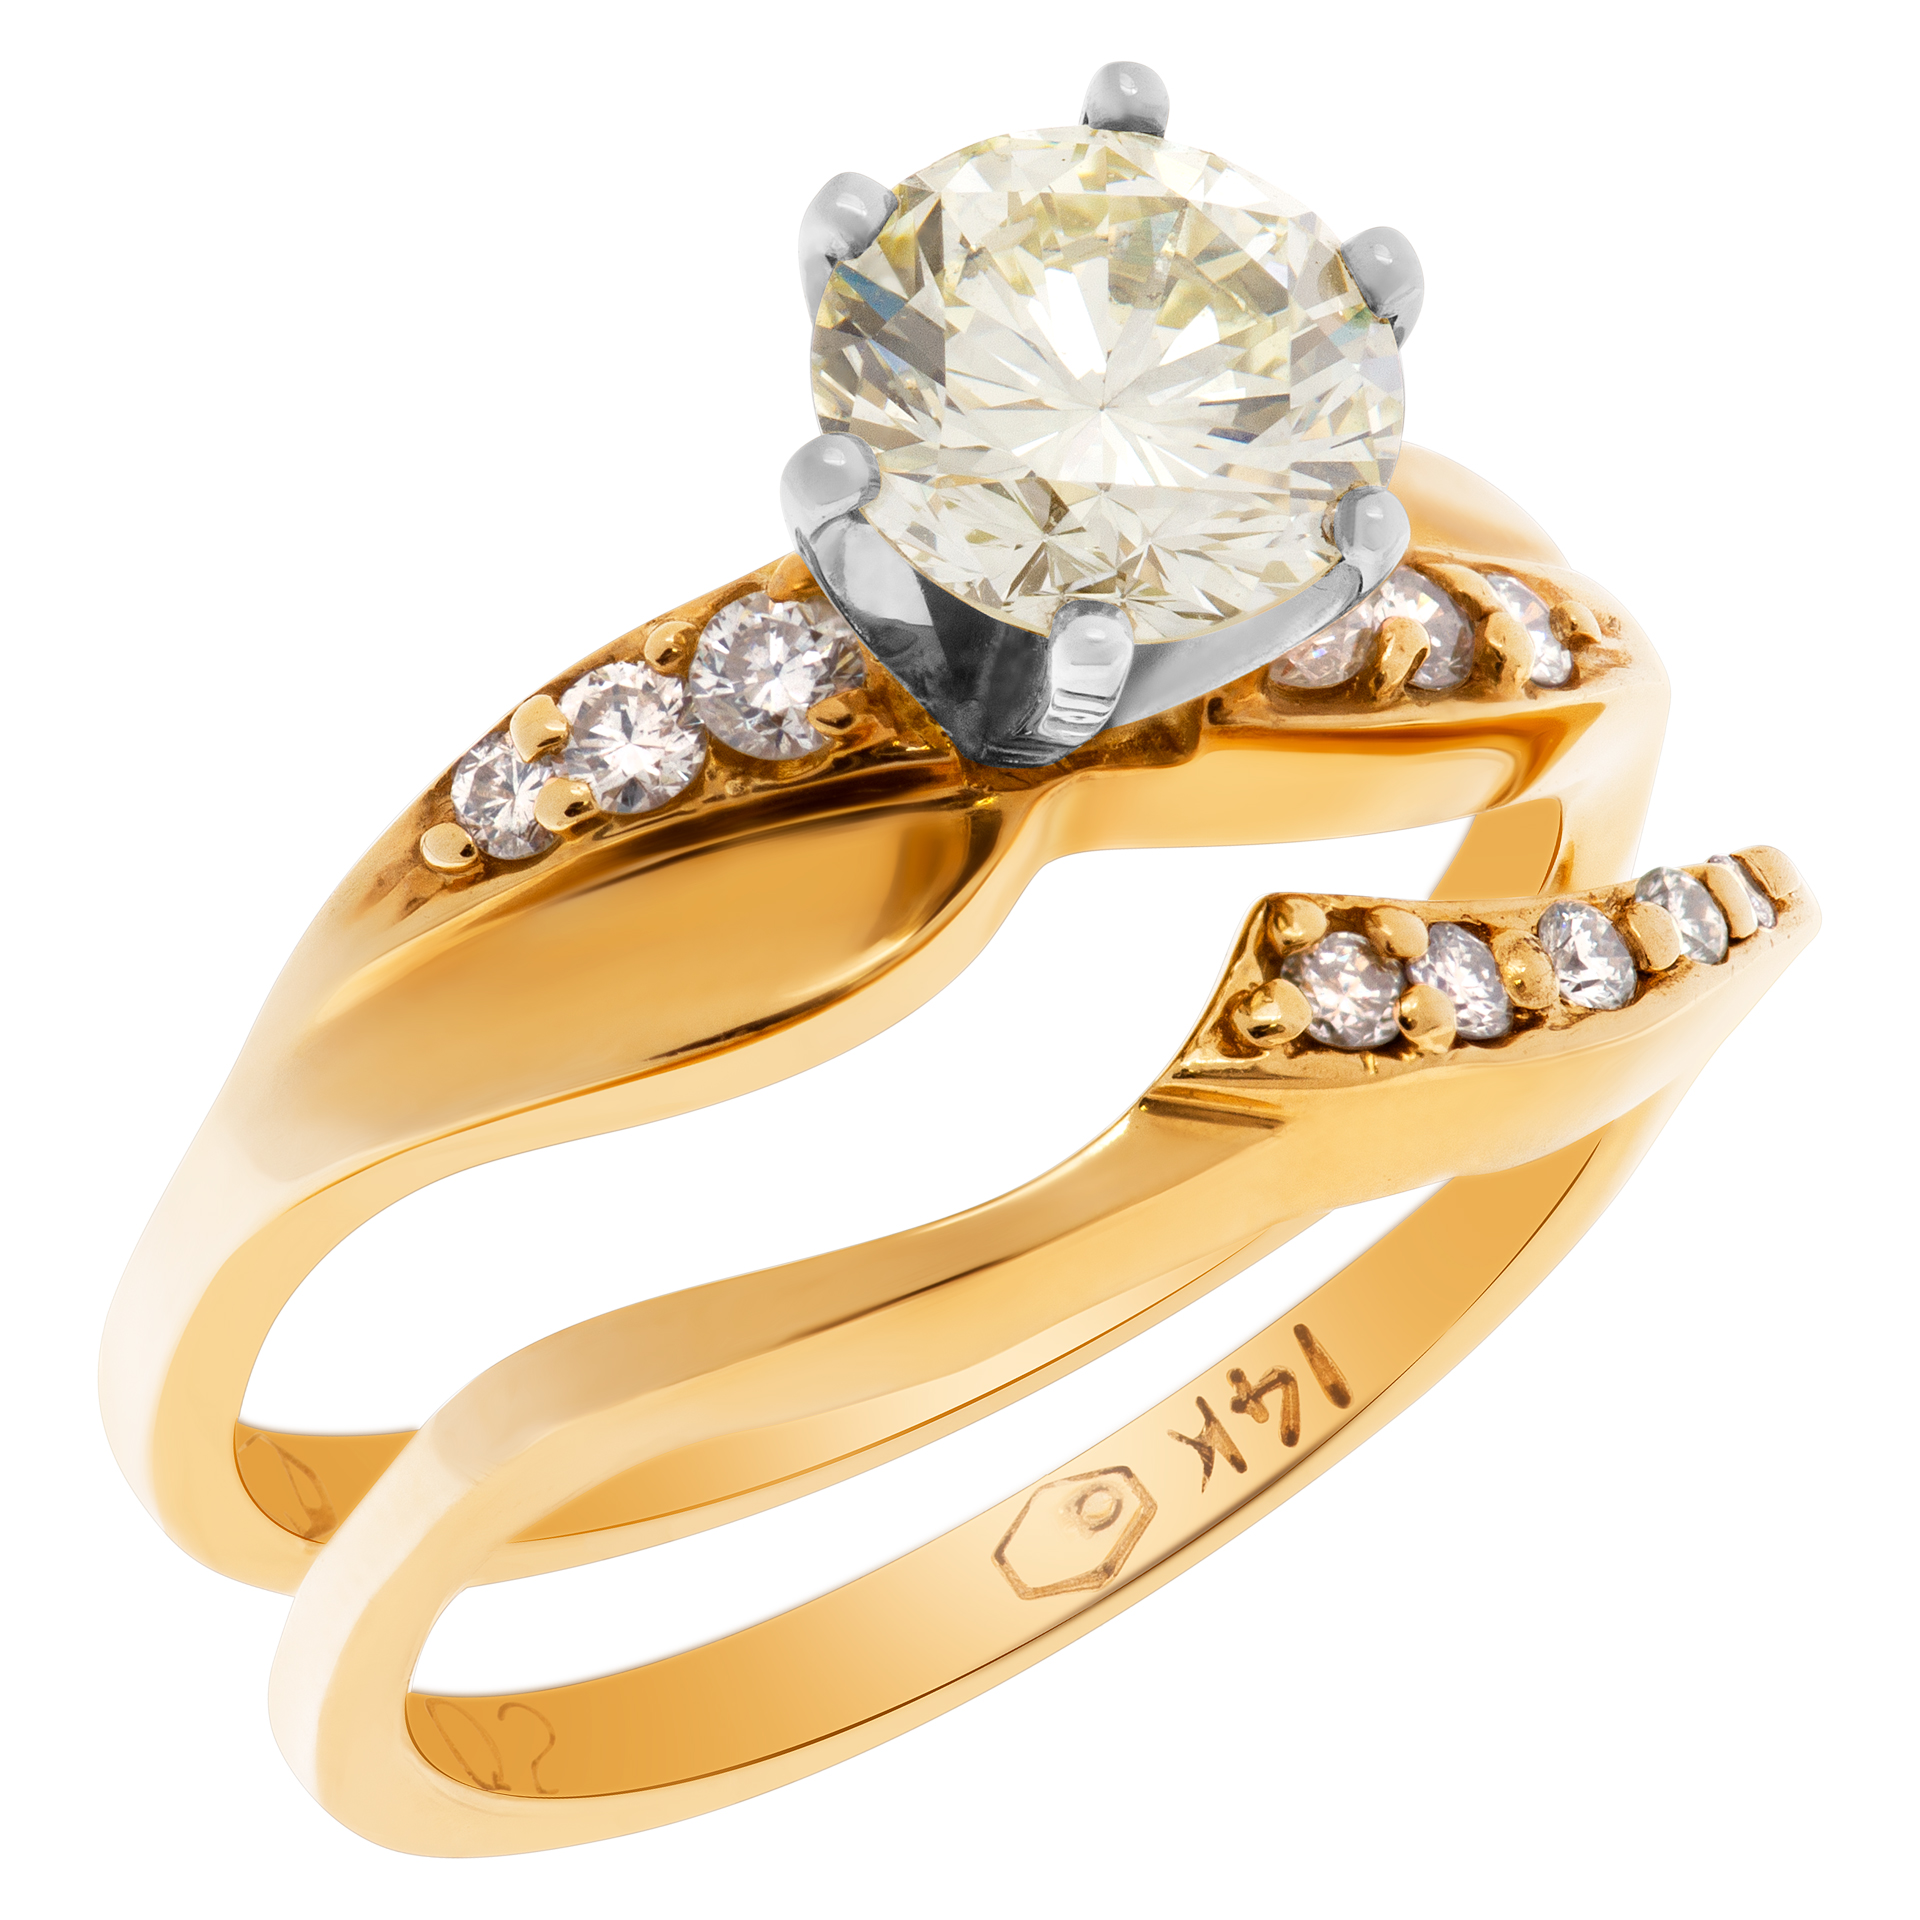 GIA certified round brilliant cut diamond 1.05 carat (W-X Color, VS-1 Clarity) ring image 4